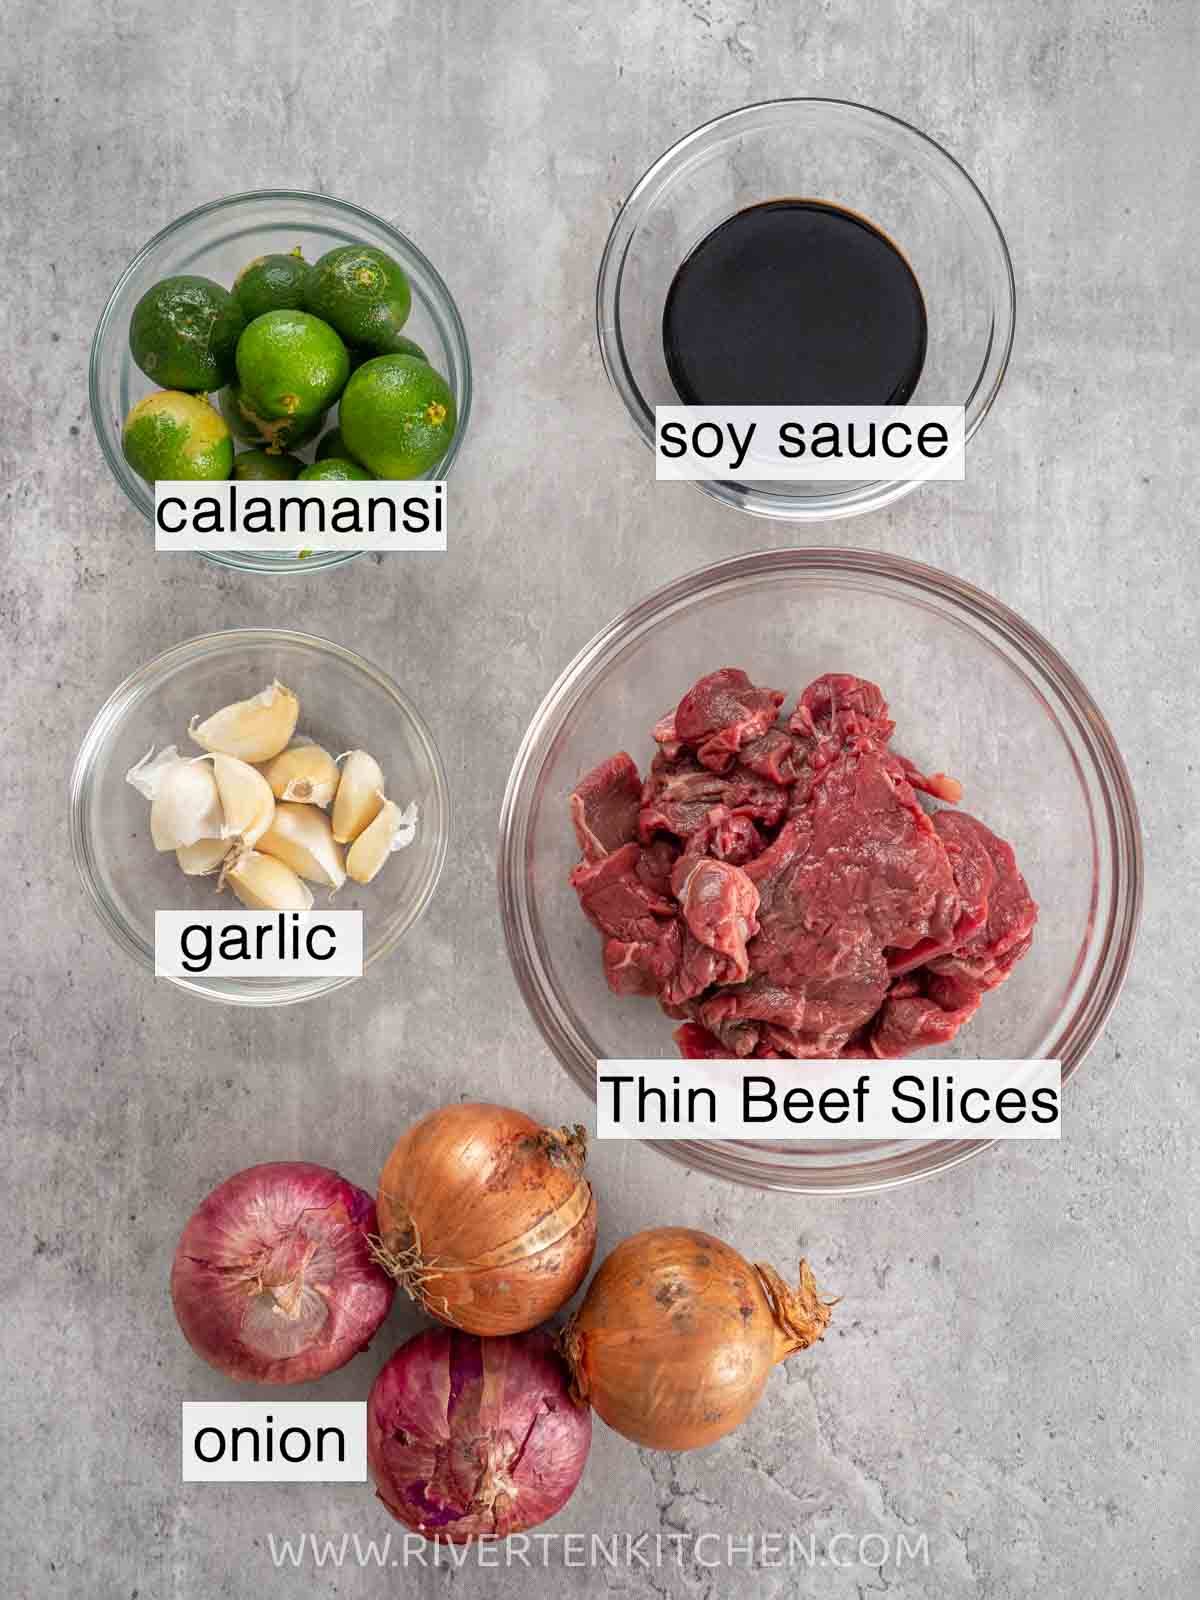 Beef slices, garlic, calamansi, soy sauce, onion